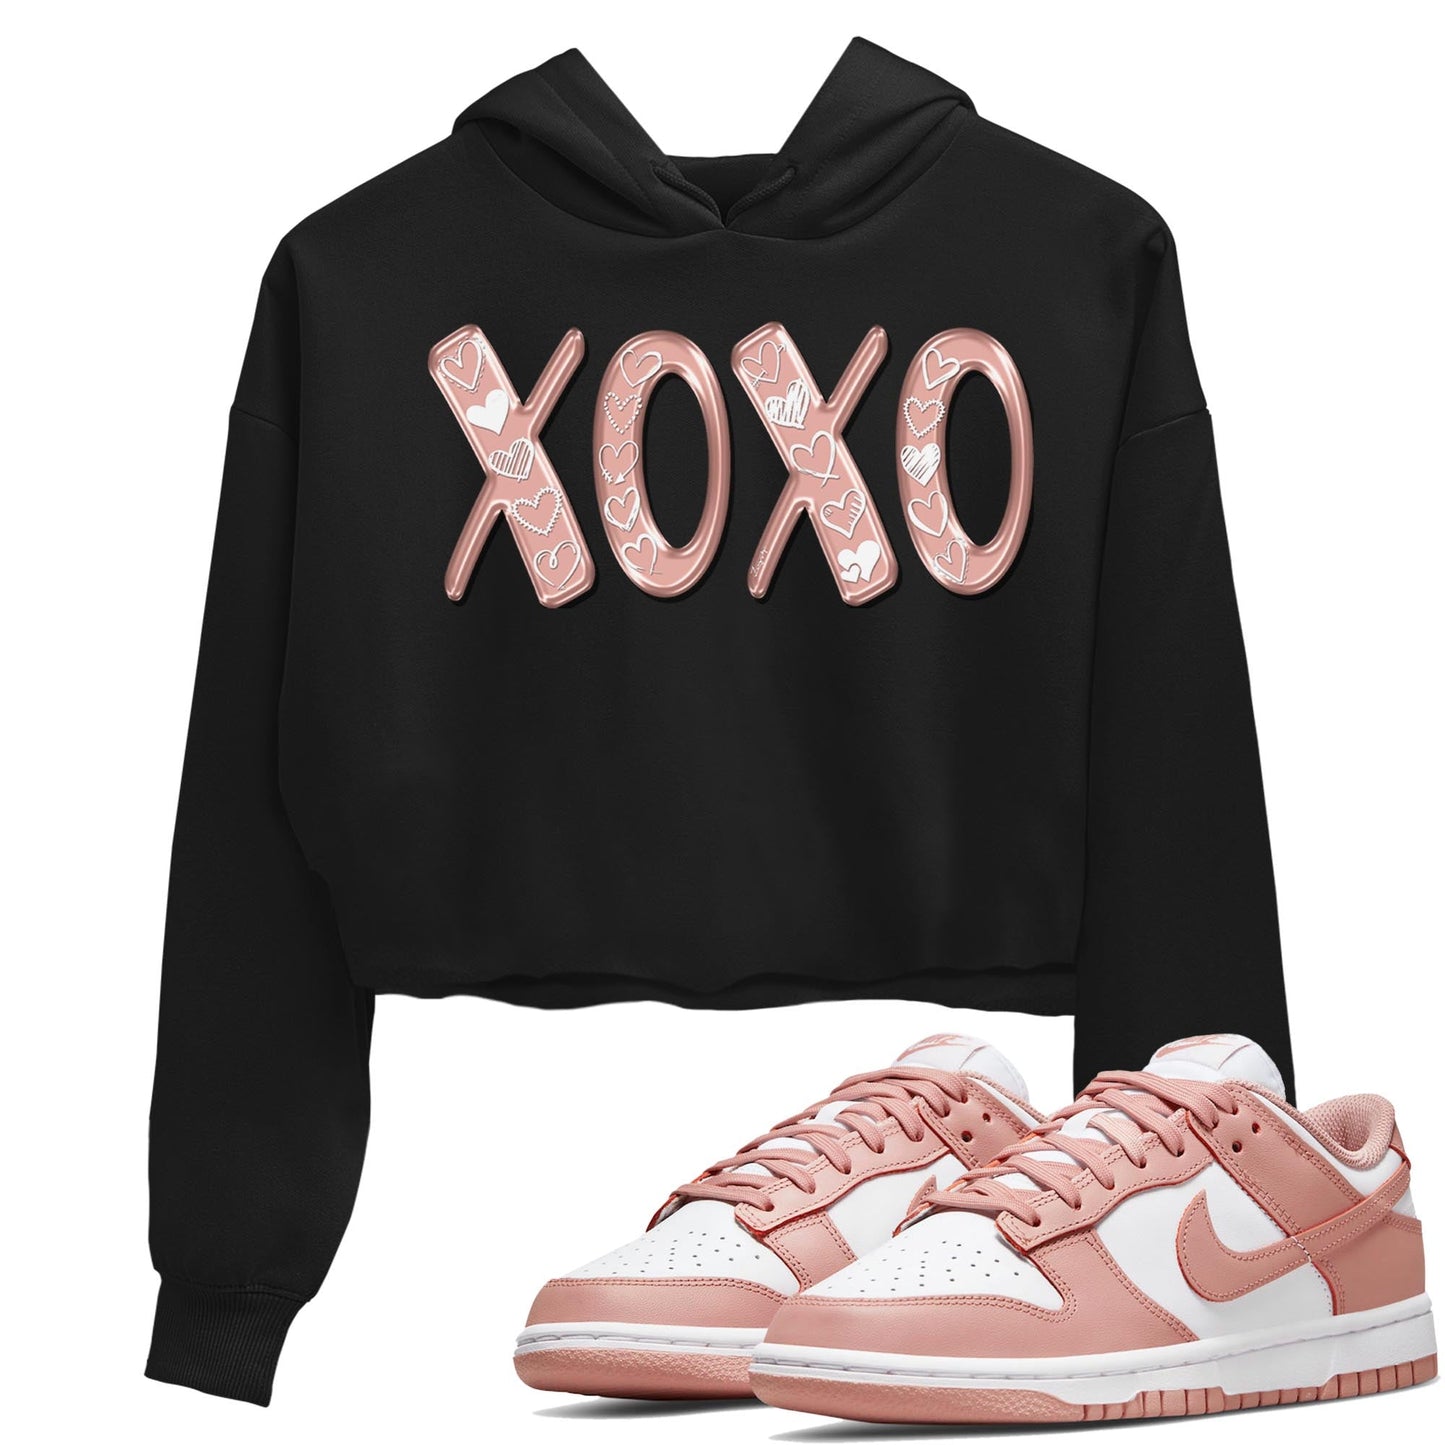 Nike Dunks Low Rose Whisper shirt to match jordans XOXO Streetwear Sneaker Shirt Nike Dunk Rose Whisper Drip Gear Zone Sneaker Matching Clothing Black 1 Crop T-Shirt